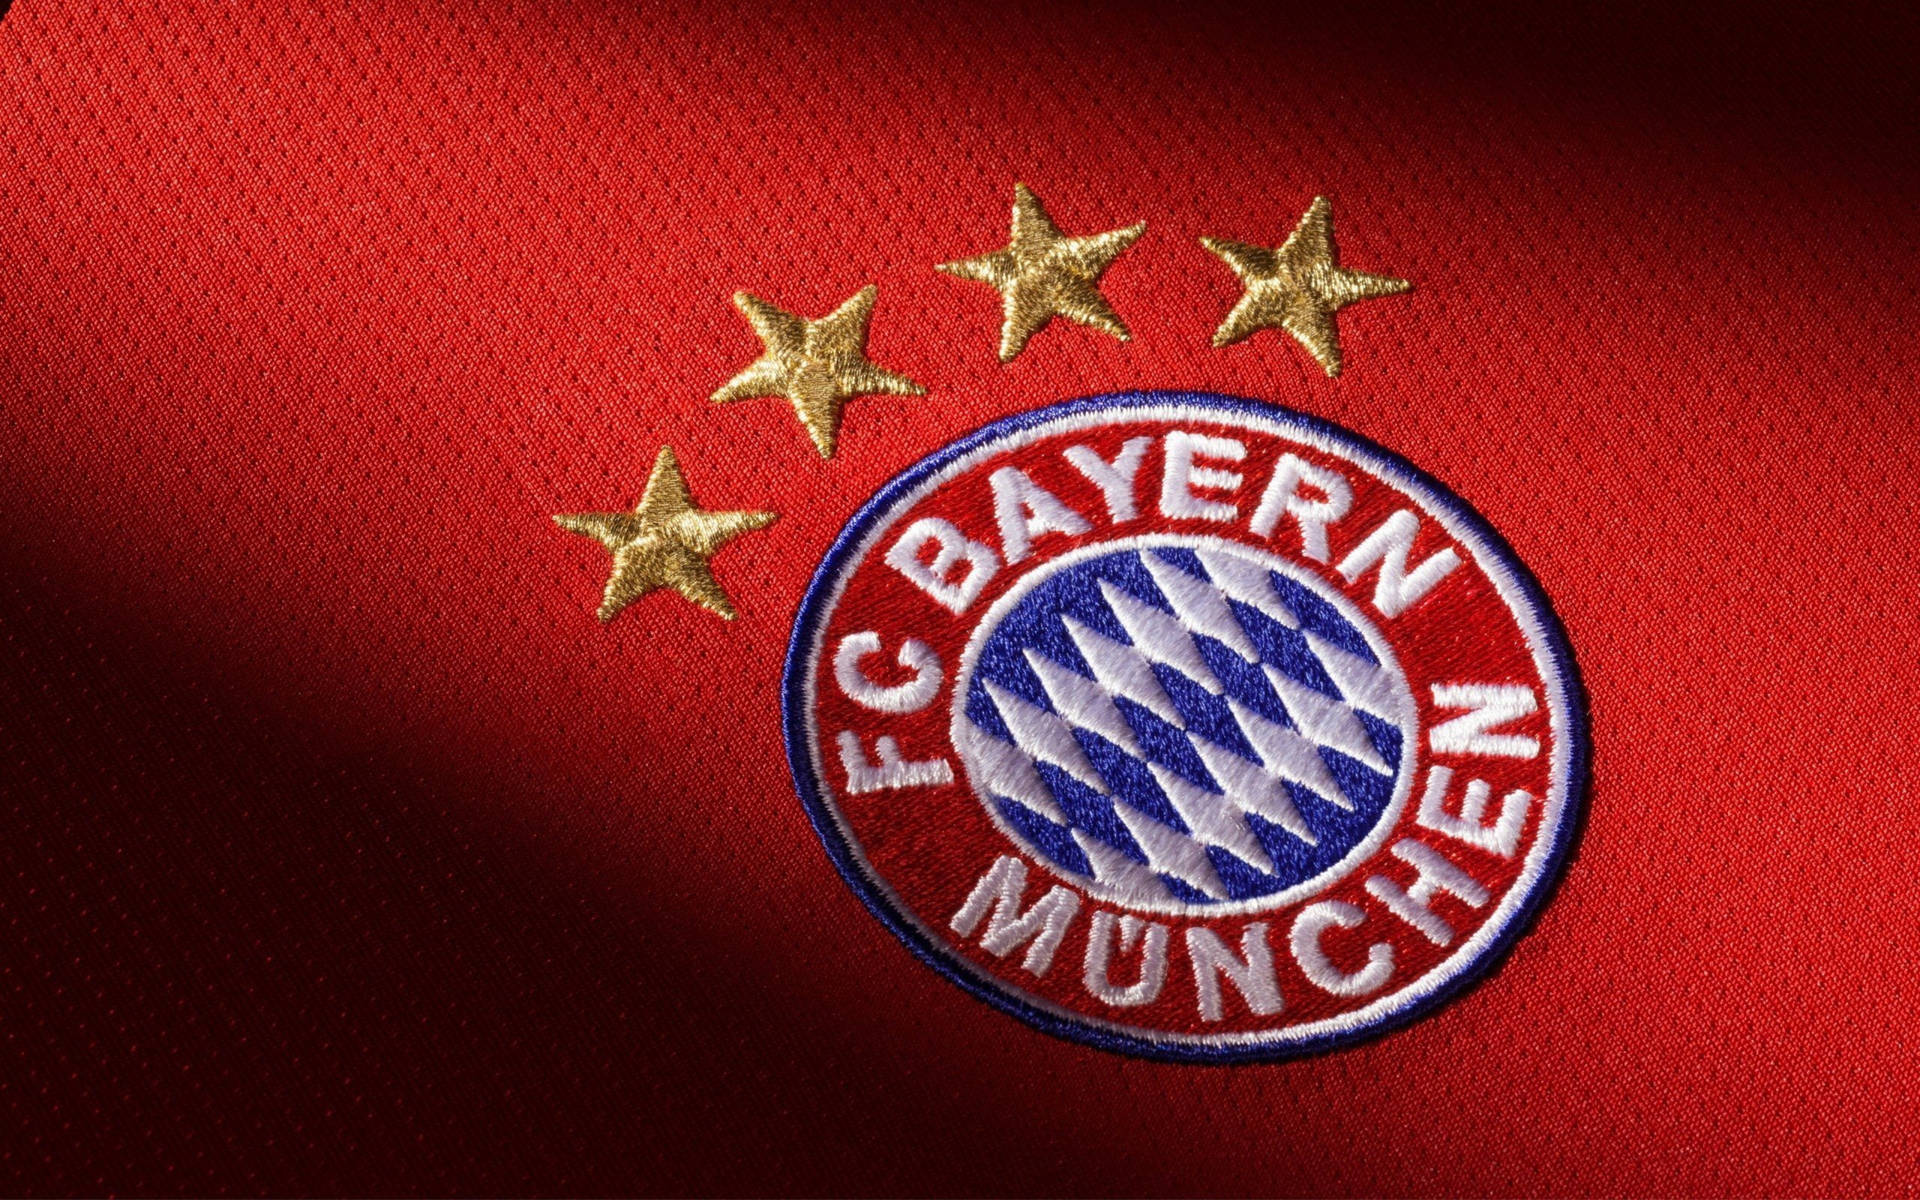 Bayern Munich Red Logo Patch Background